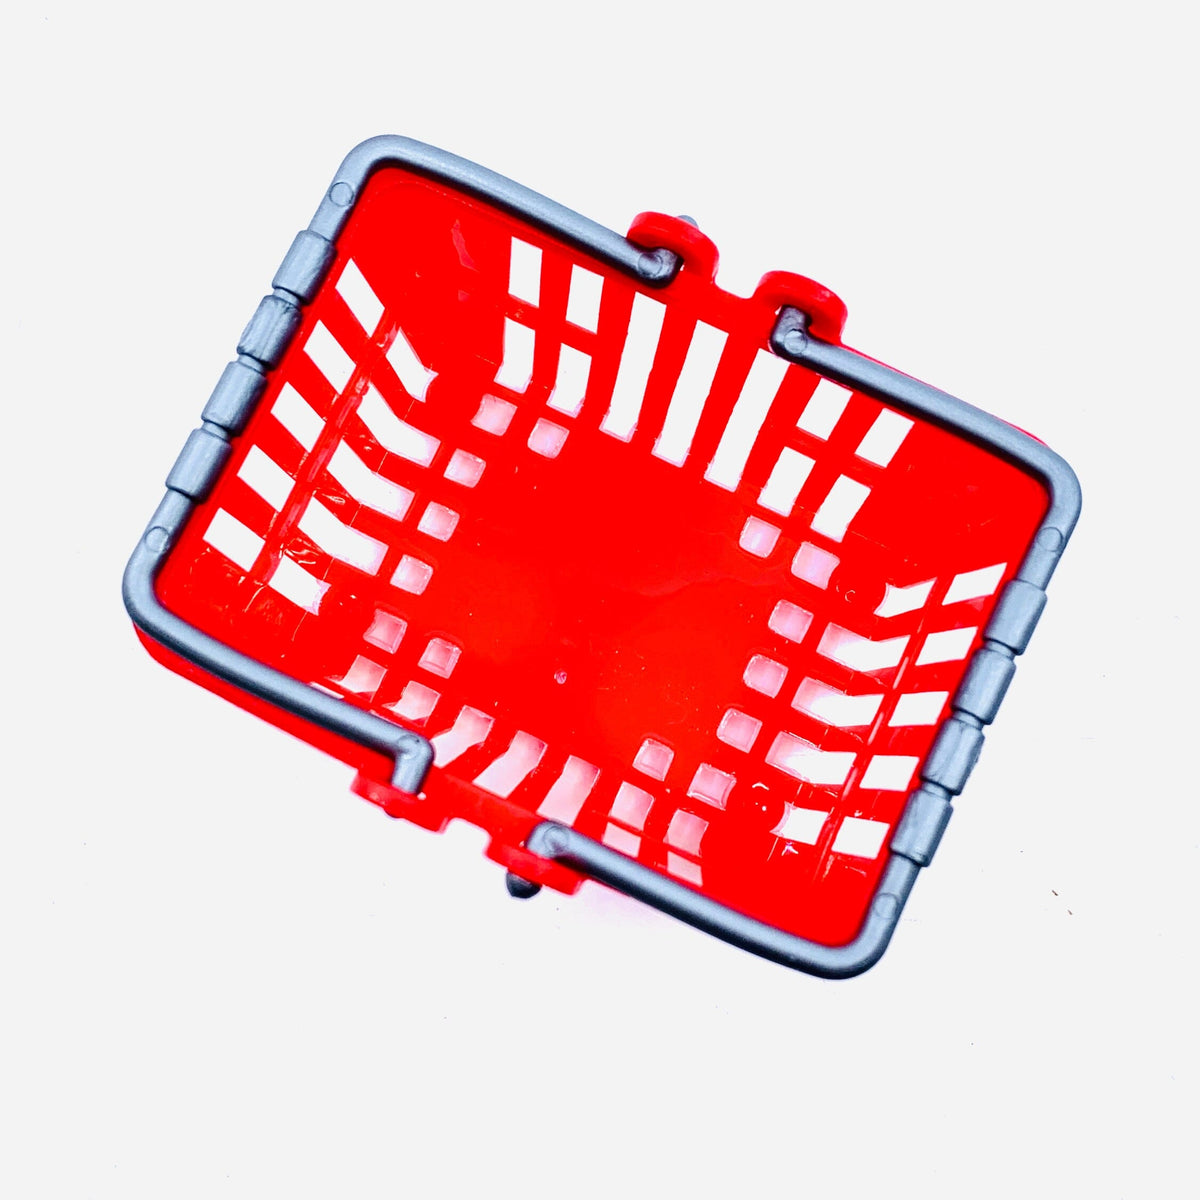 Tiny Target Shopping Basket Miniature - 